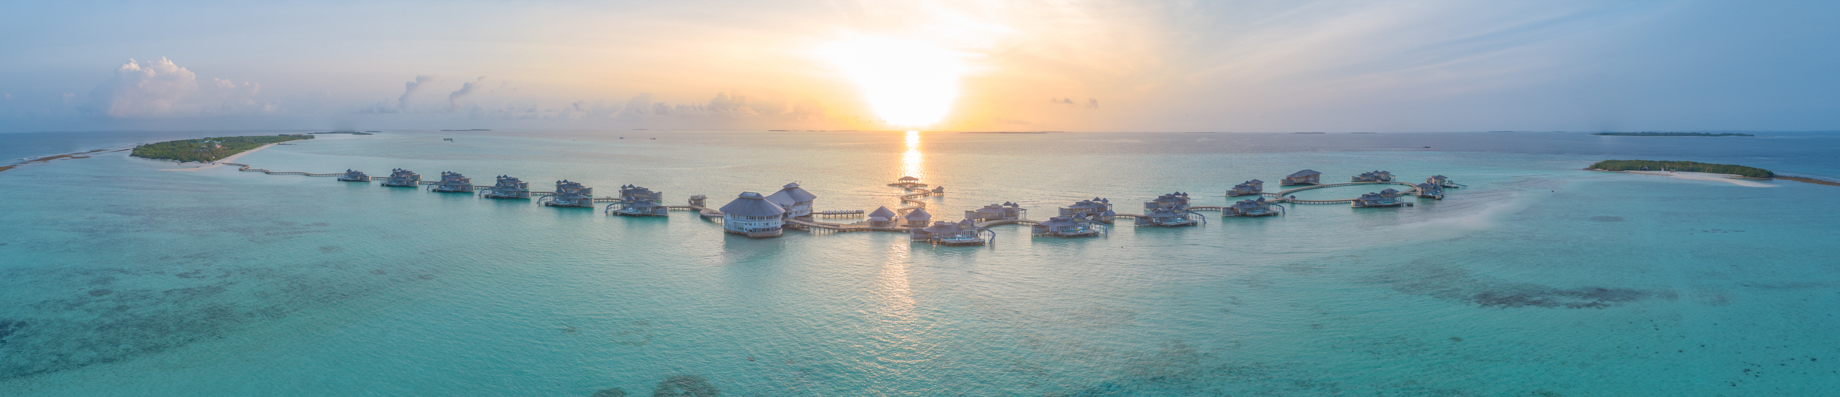 Soneva Jani Resort – Noonu Atoll, Medhufaru, Maldives – Aerial Panorama Sunset